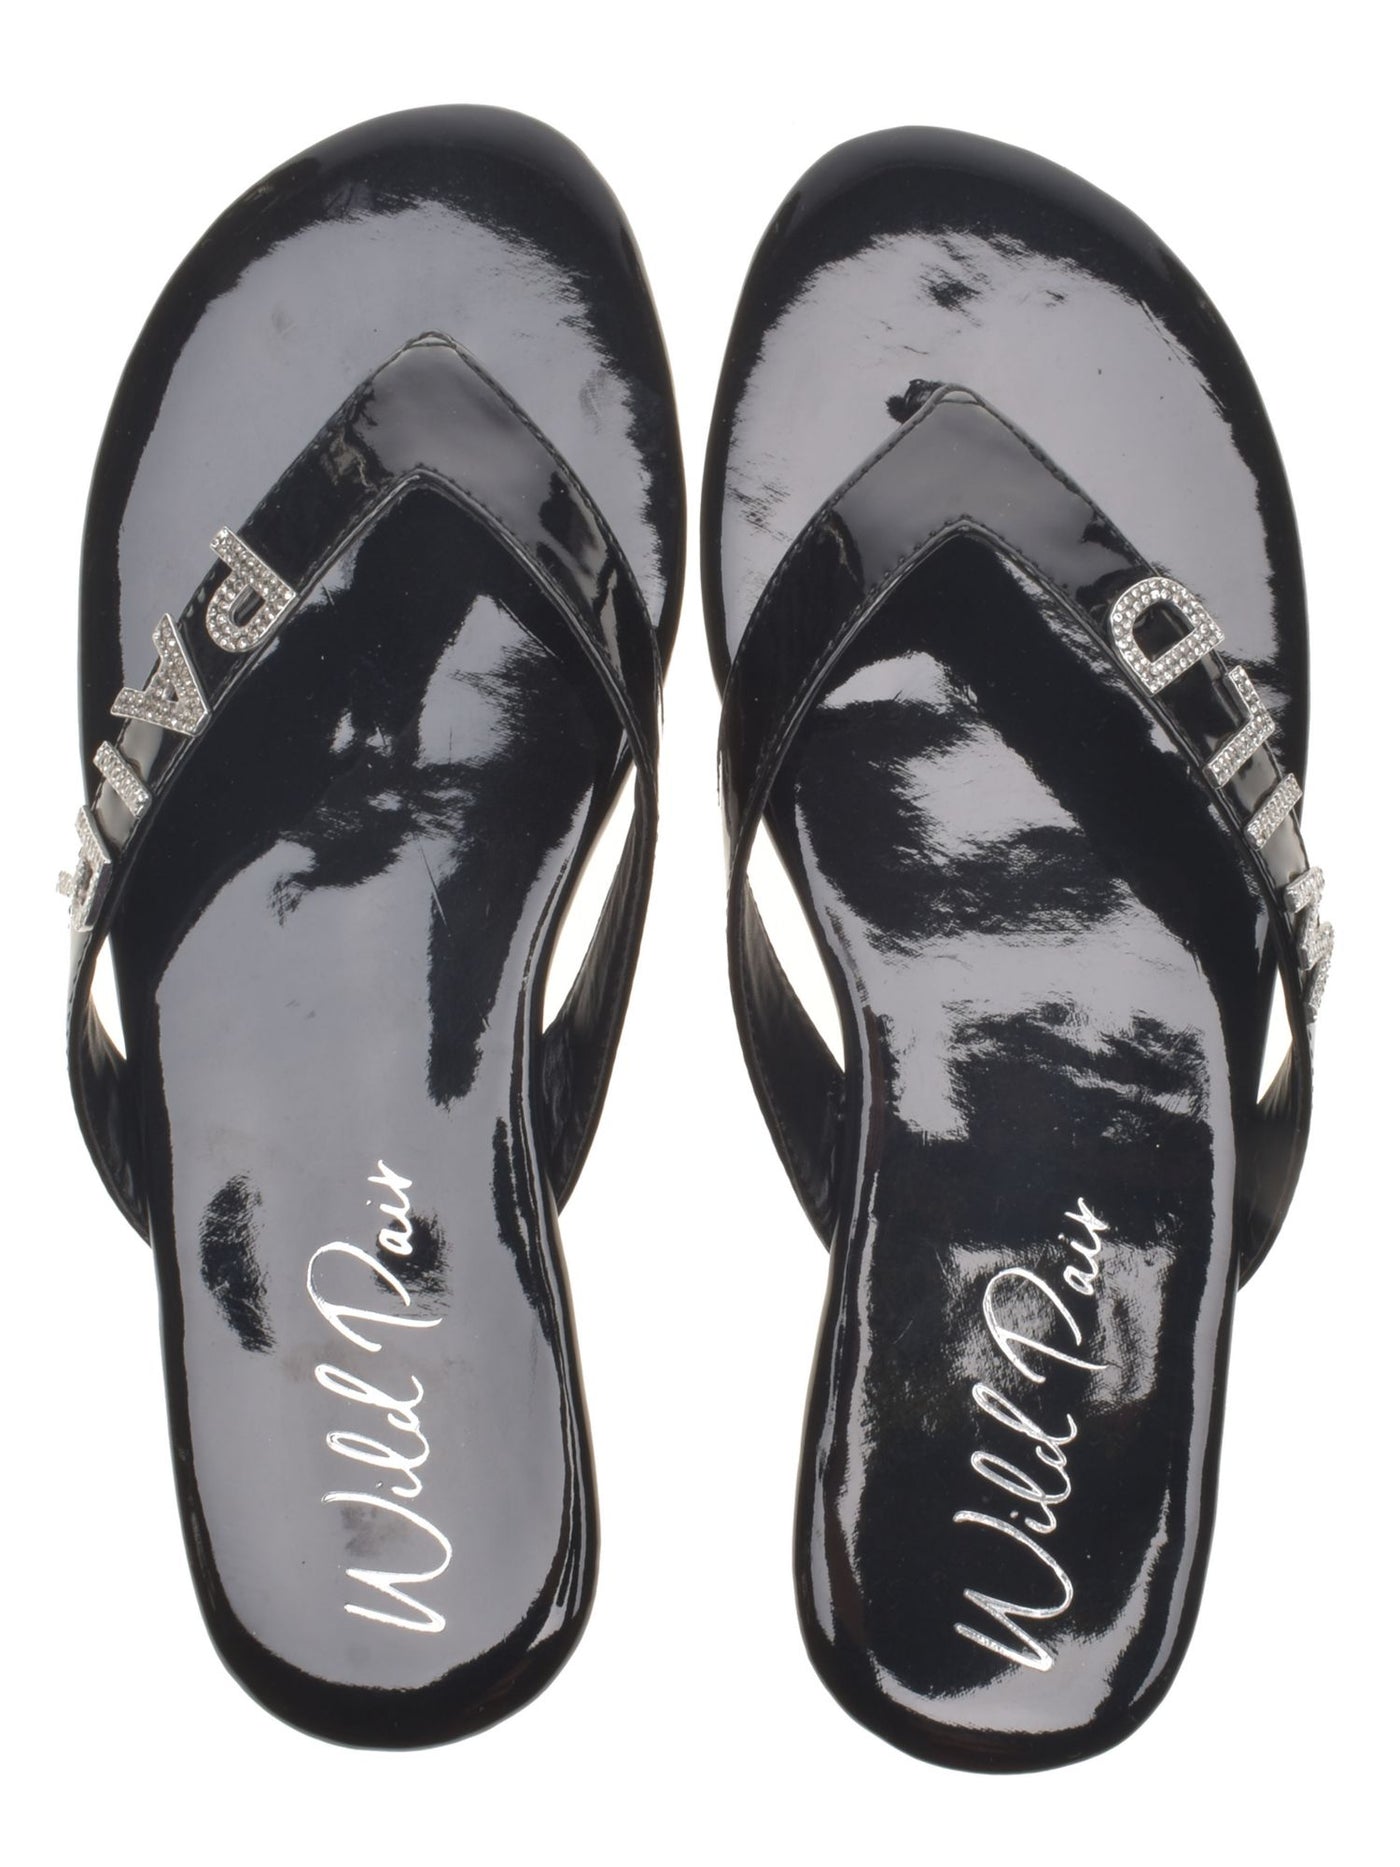 WILD PAIR Womens Black Rhinestone Fantasia Round Toe Slip On Thong Sandals Shoes 8 M